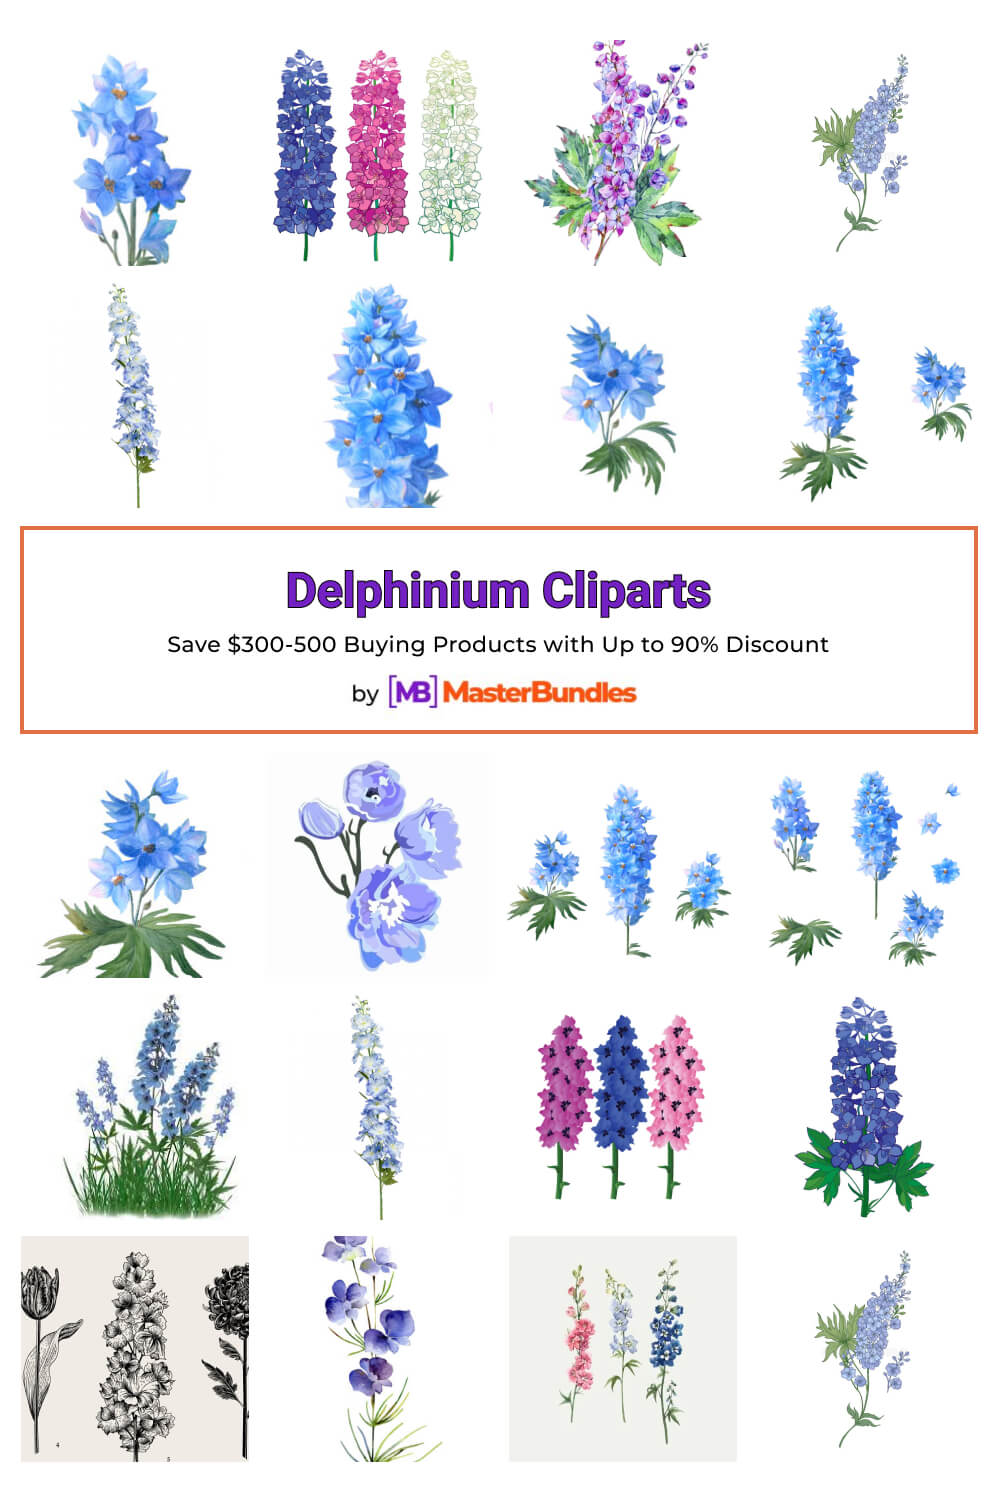 delphinium cliparts pinterest image.